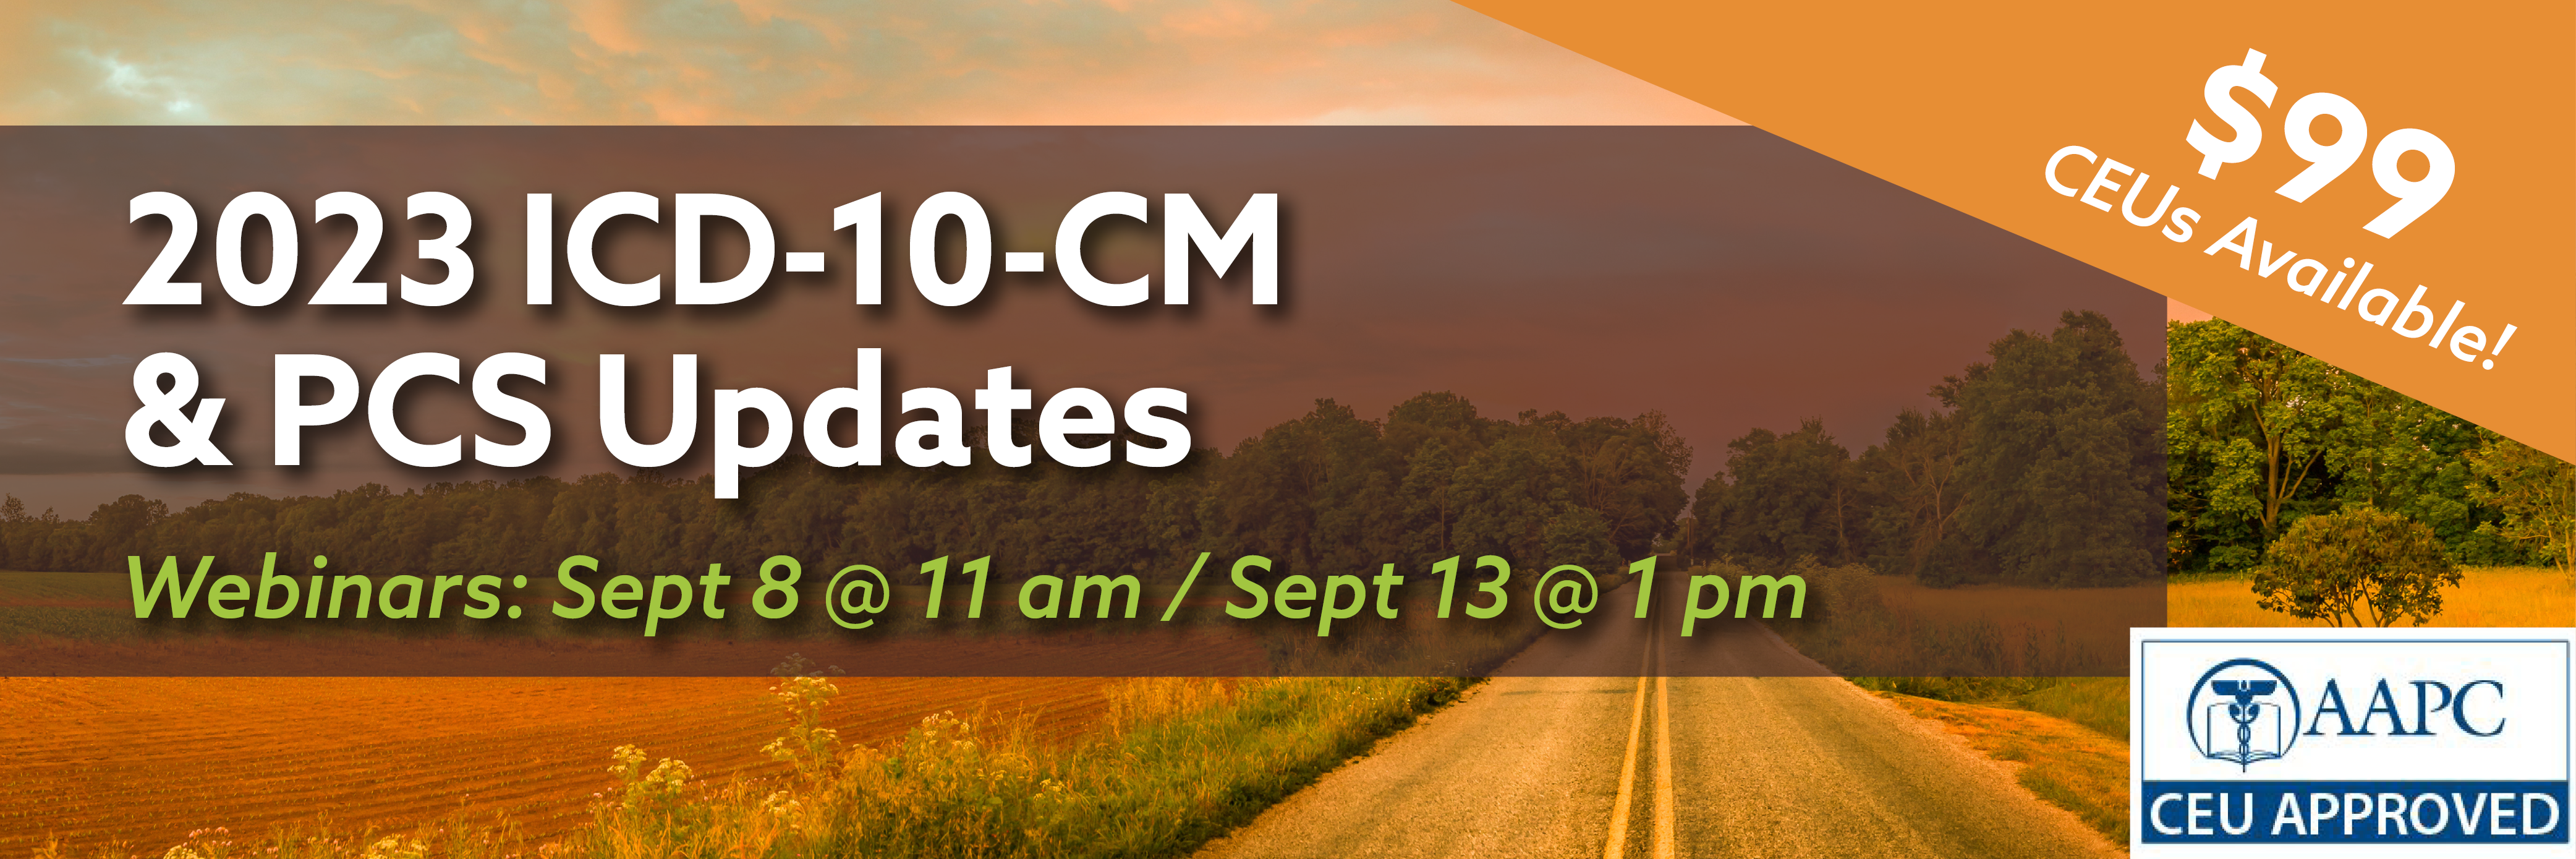 2023 ICD-10-CM & PCS Updates / Webinars: sept 8 @ 11 am / Sept 13 @ 1 pm